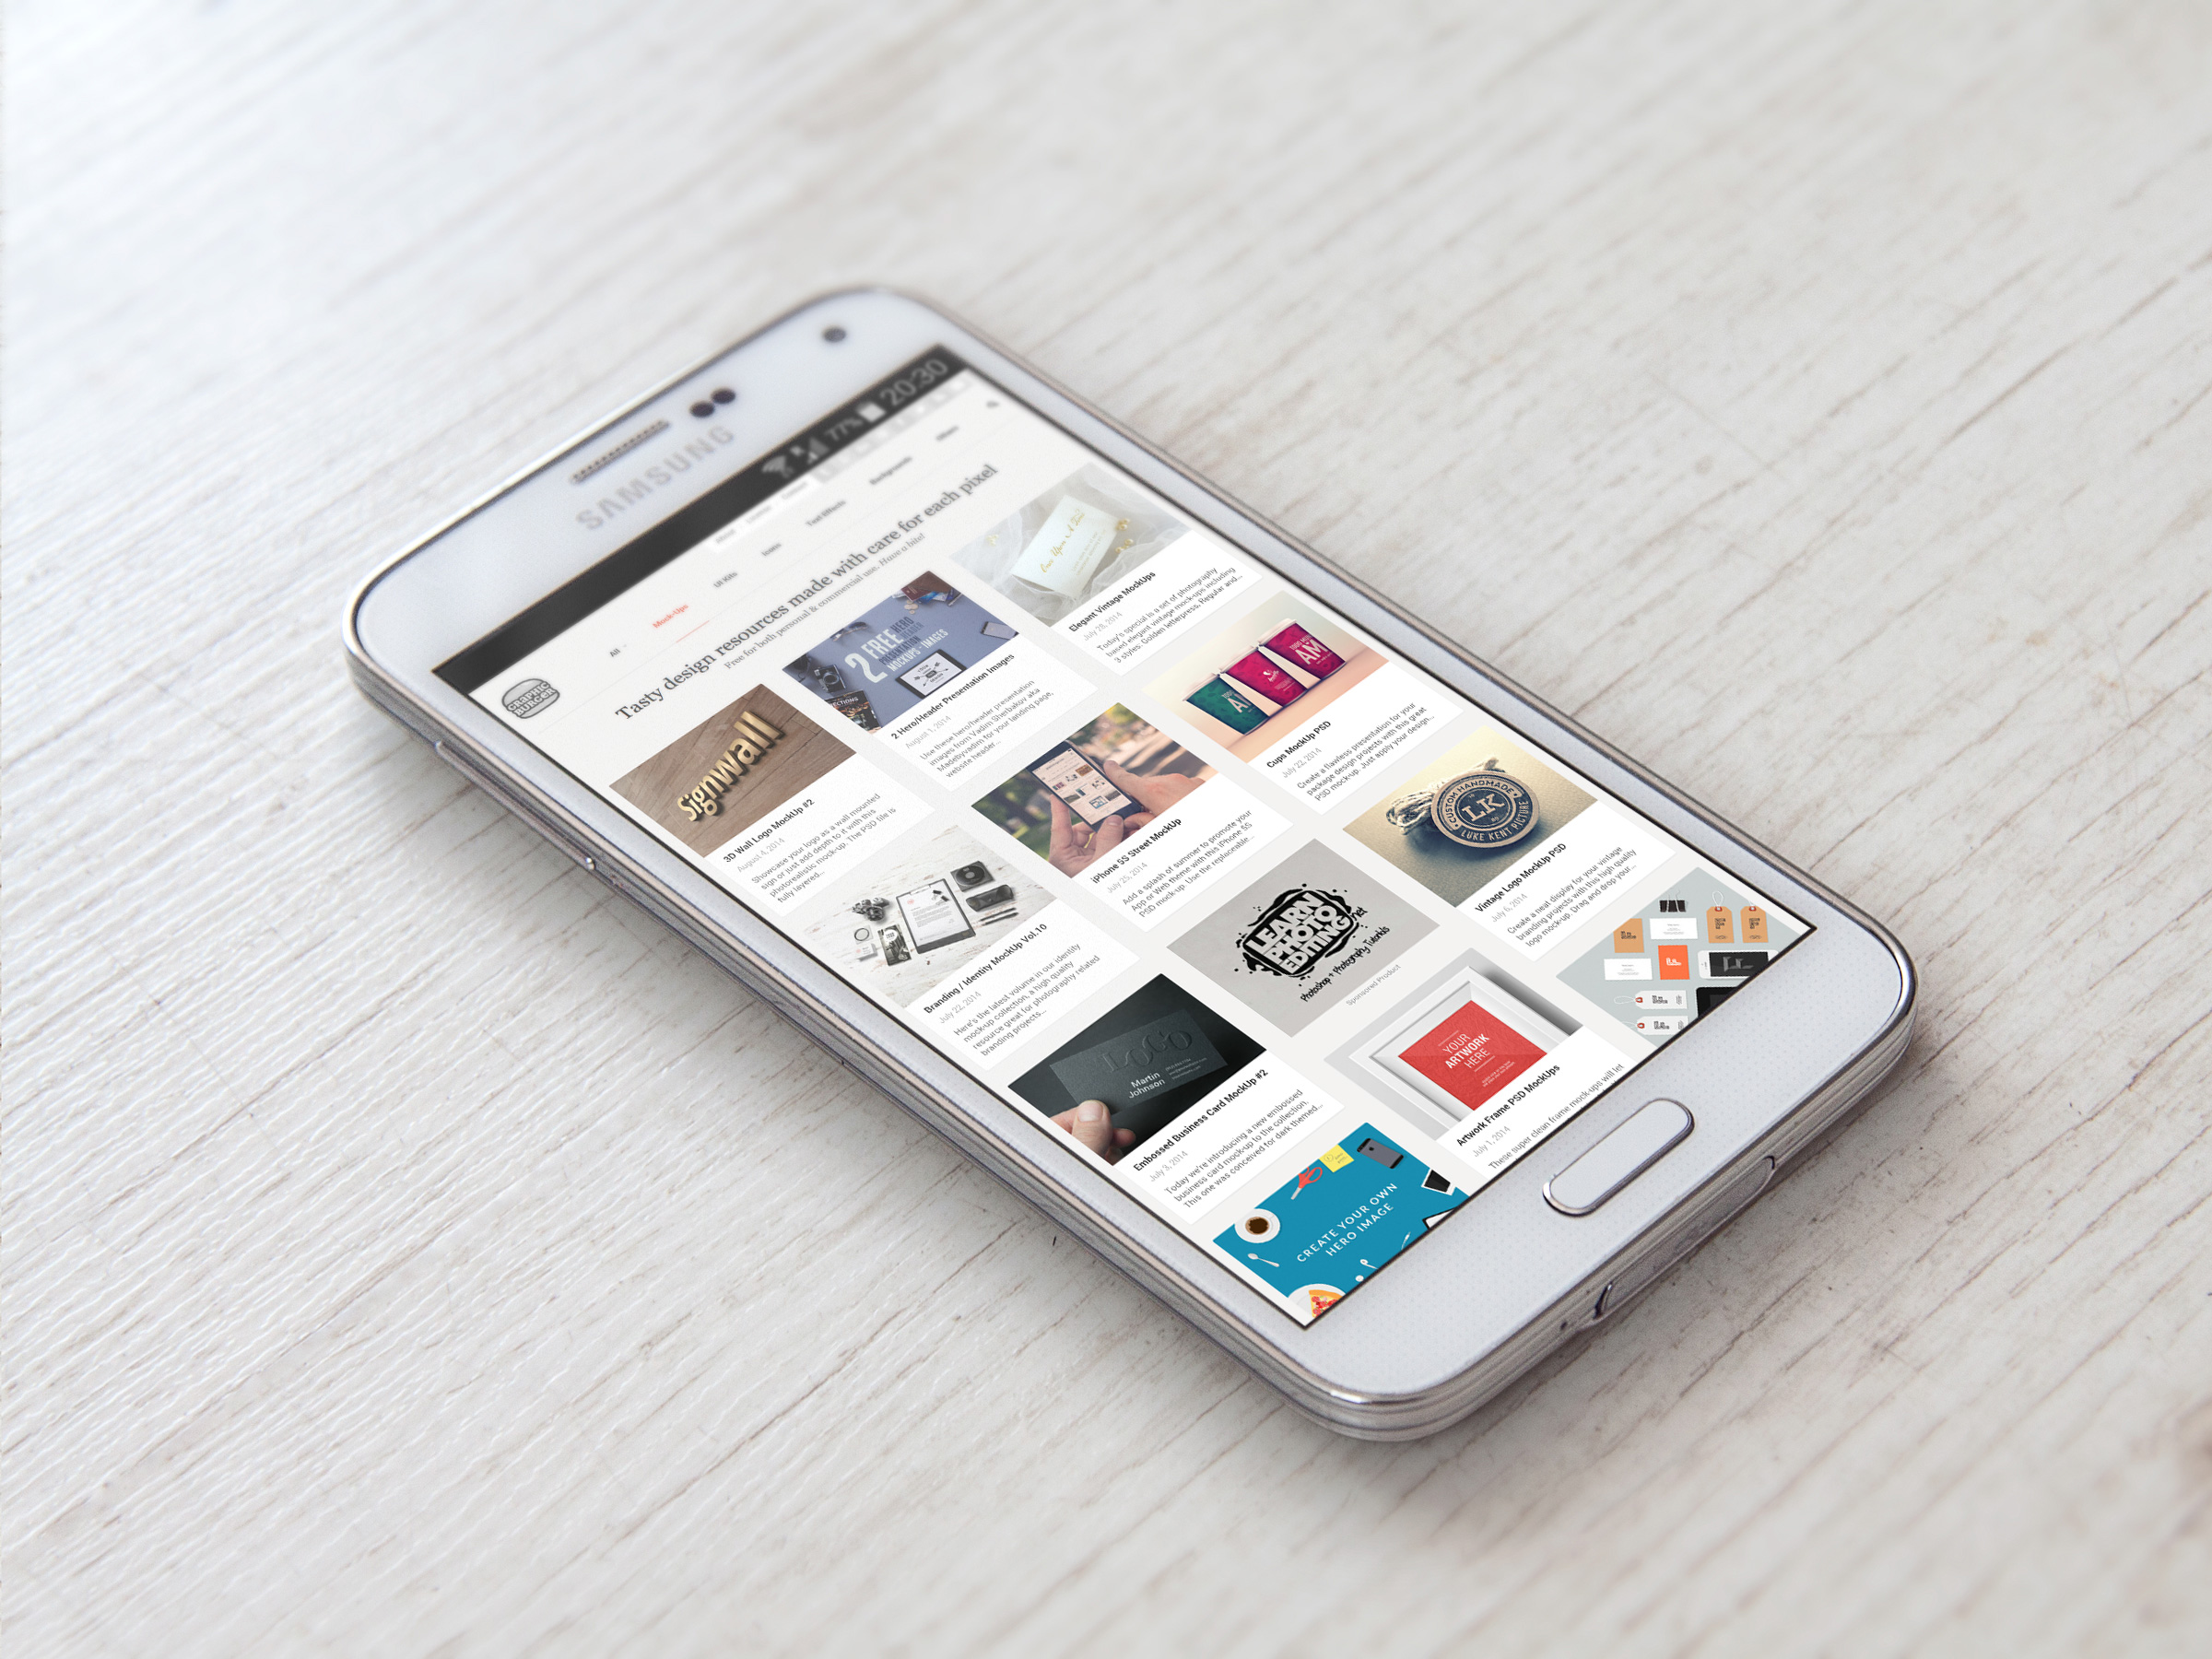 Download Samsung Galaxy S5 PSD MockUp | GraphicBurger